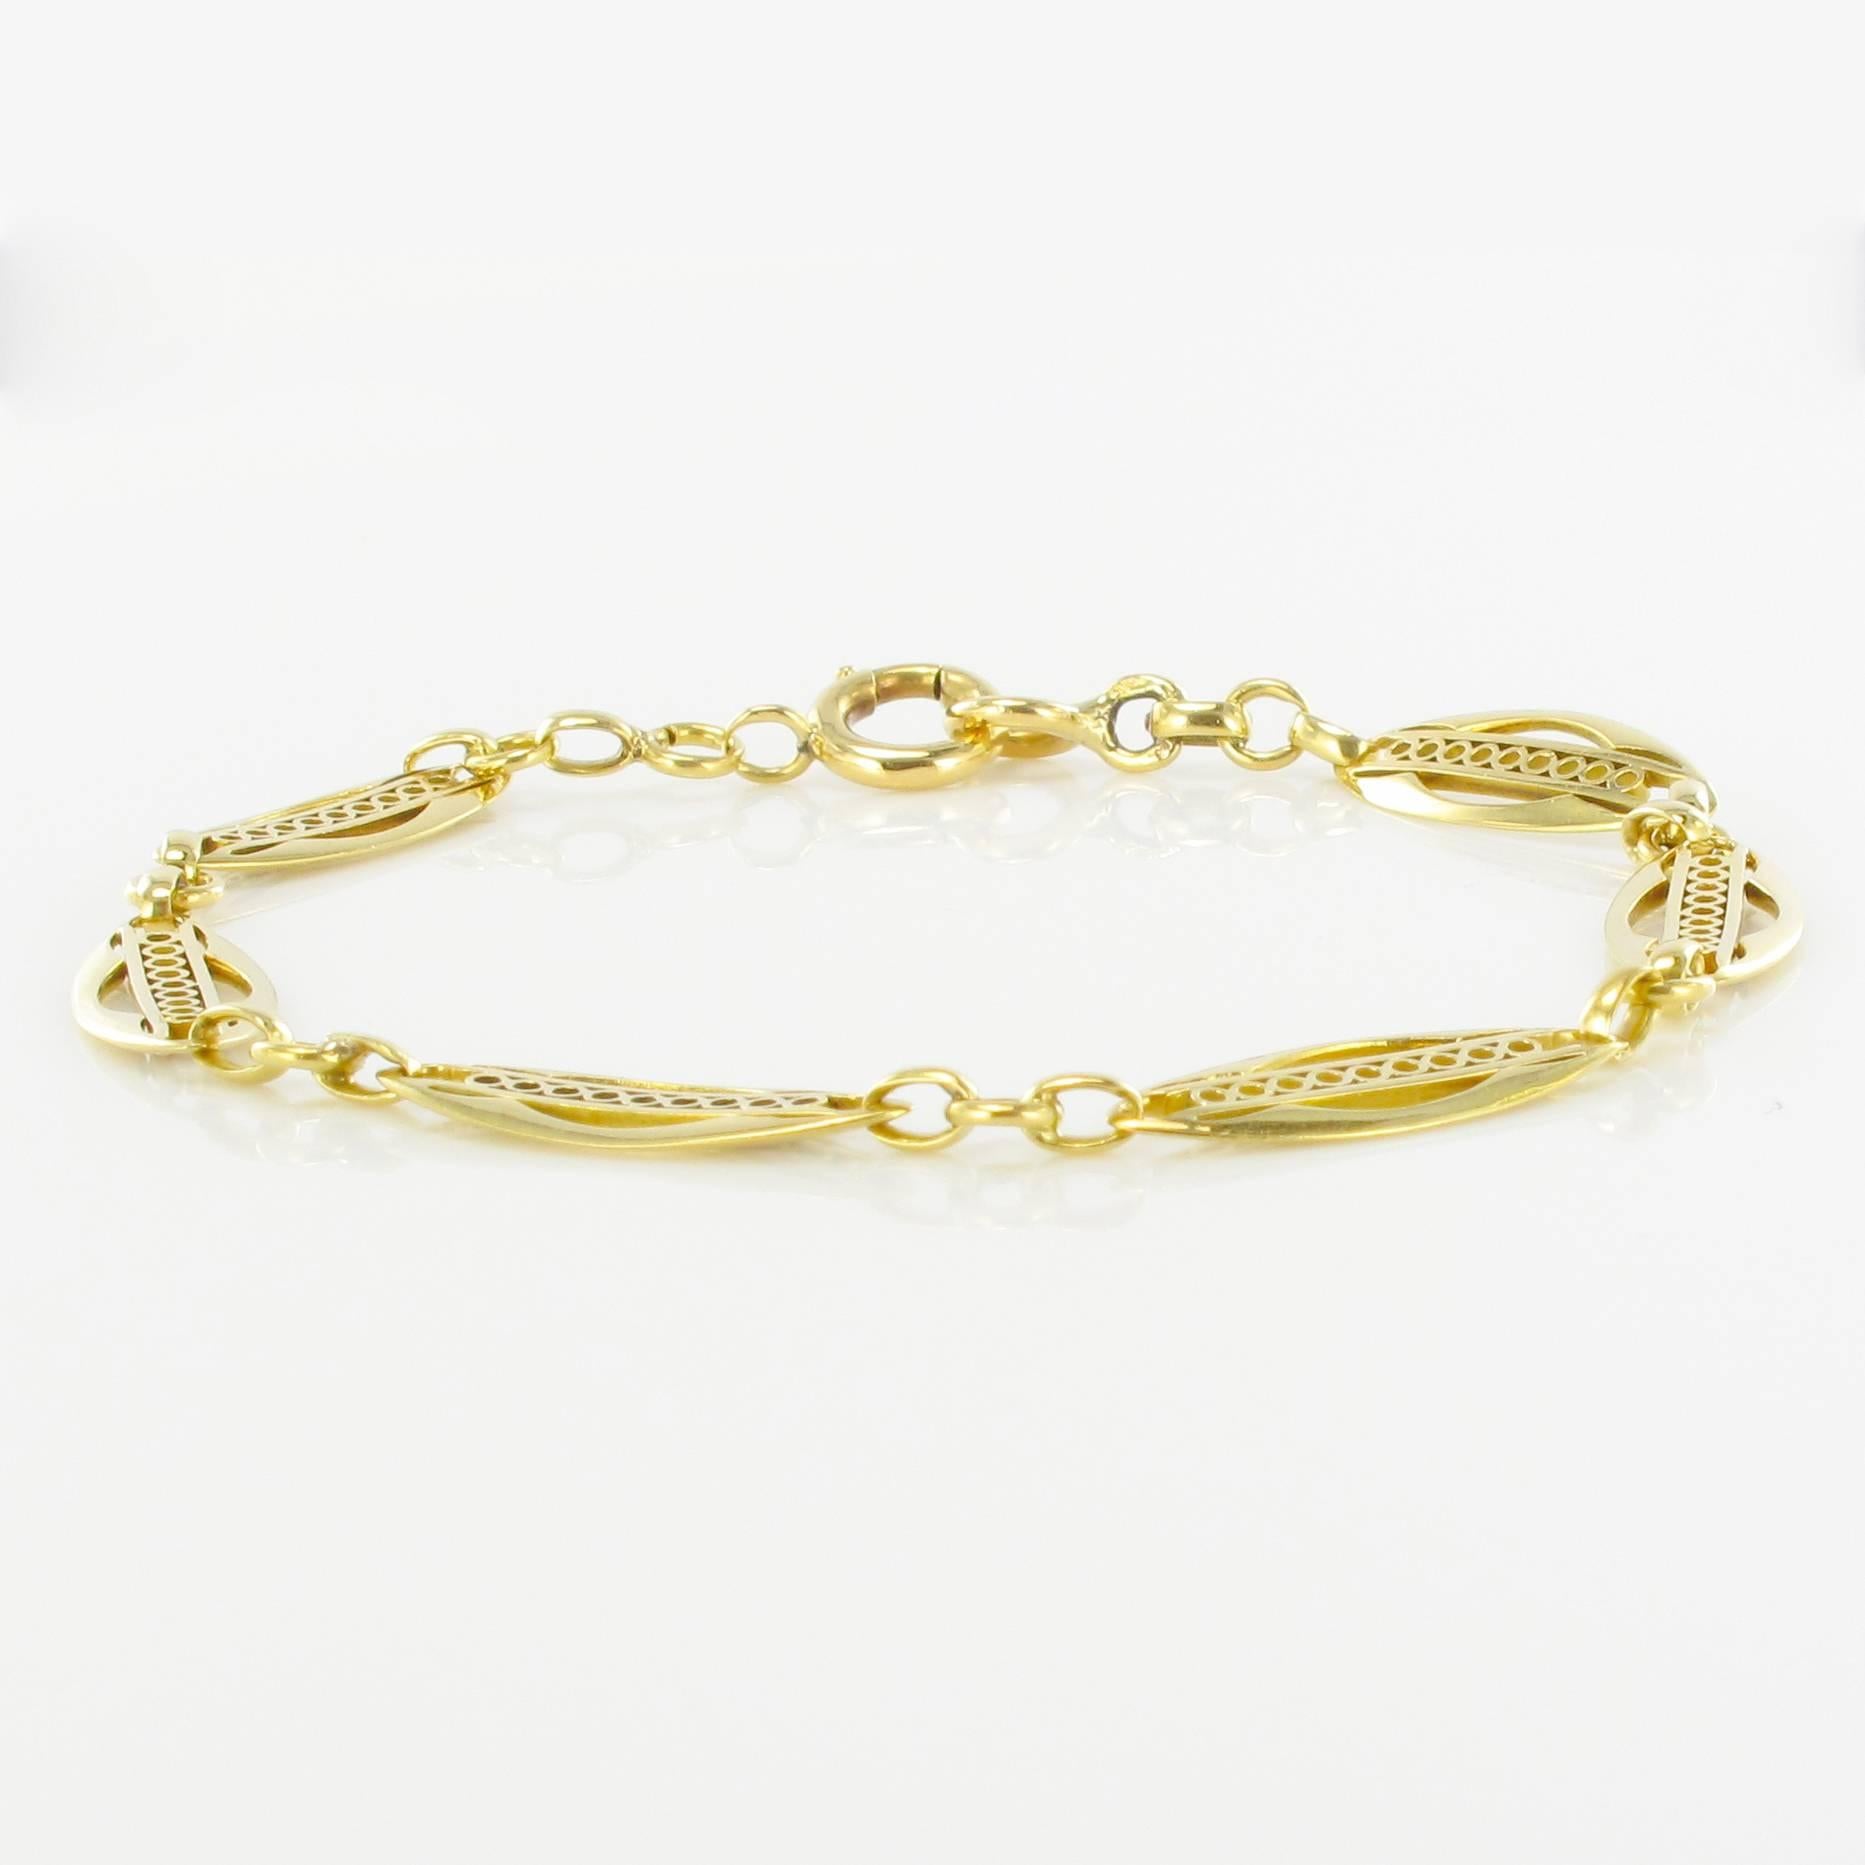 Women's 1900s French Belle Époque 18 Carat Yellow Gold Link Chain Bracelet